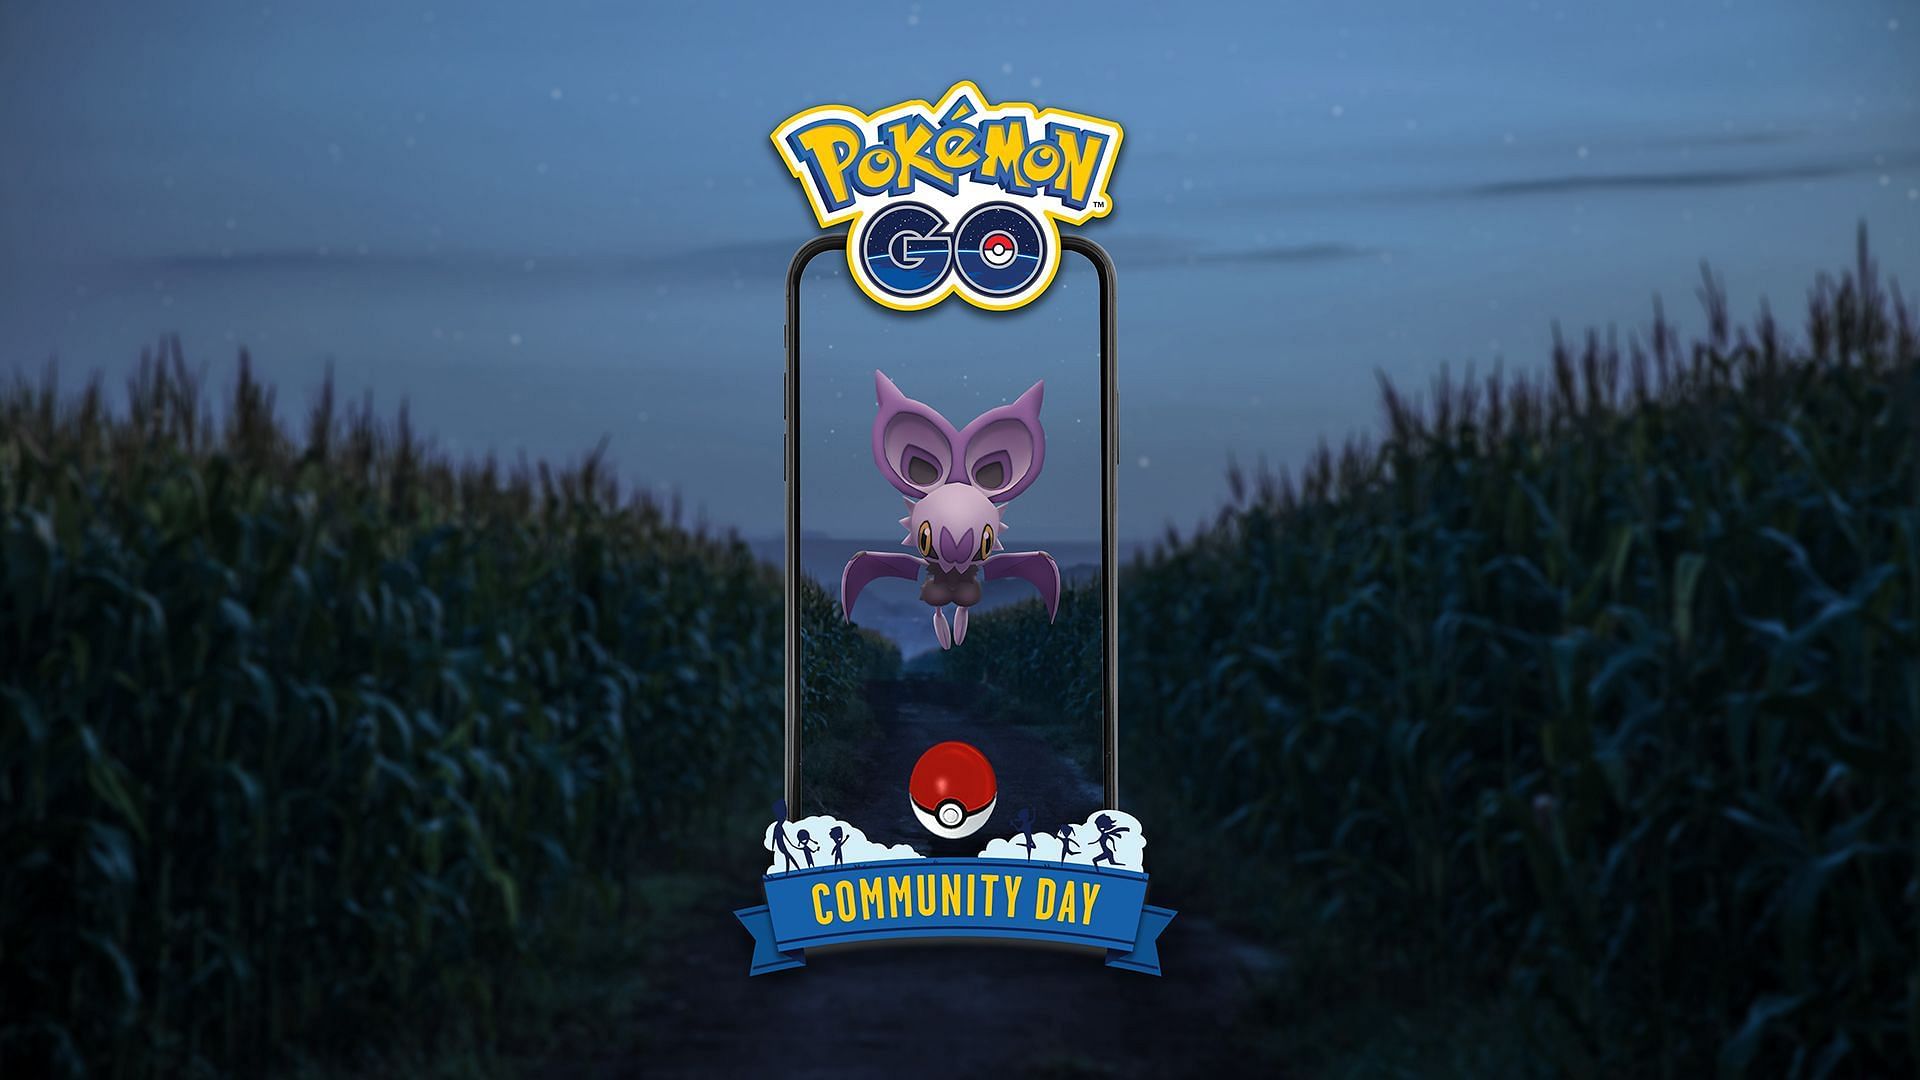 The Latest Pokémon GO Community Day and Something Mew!